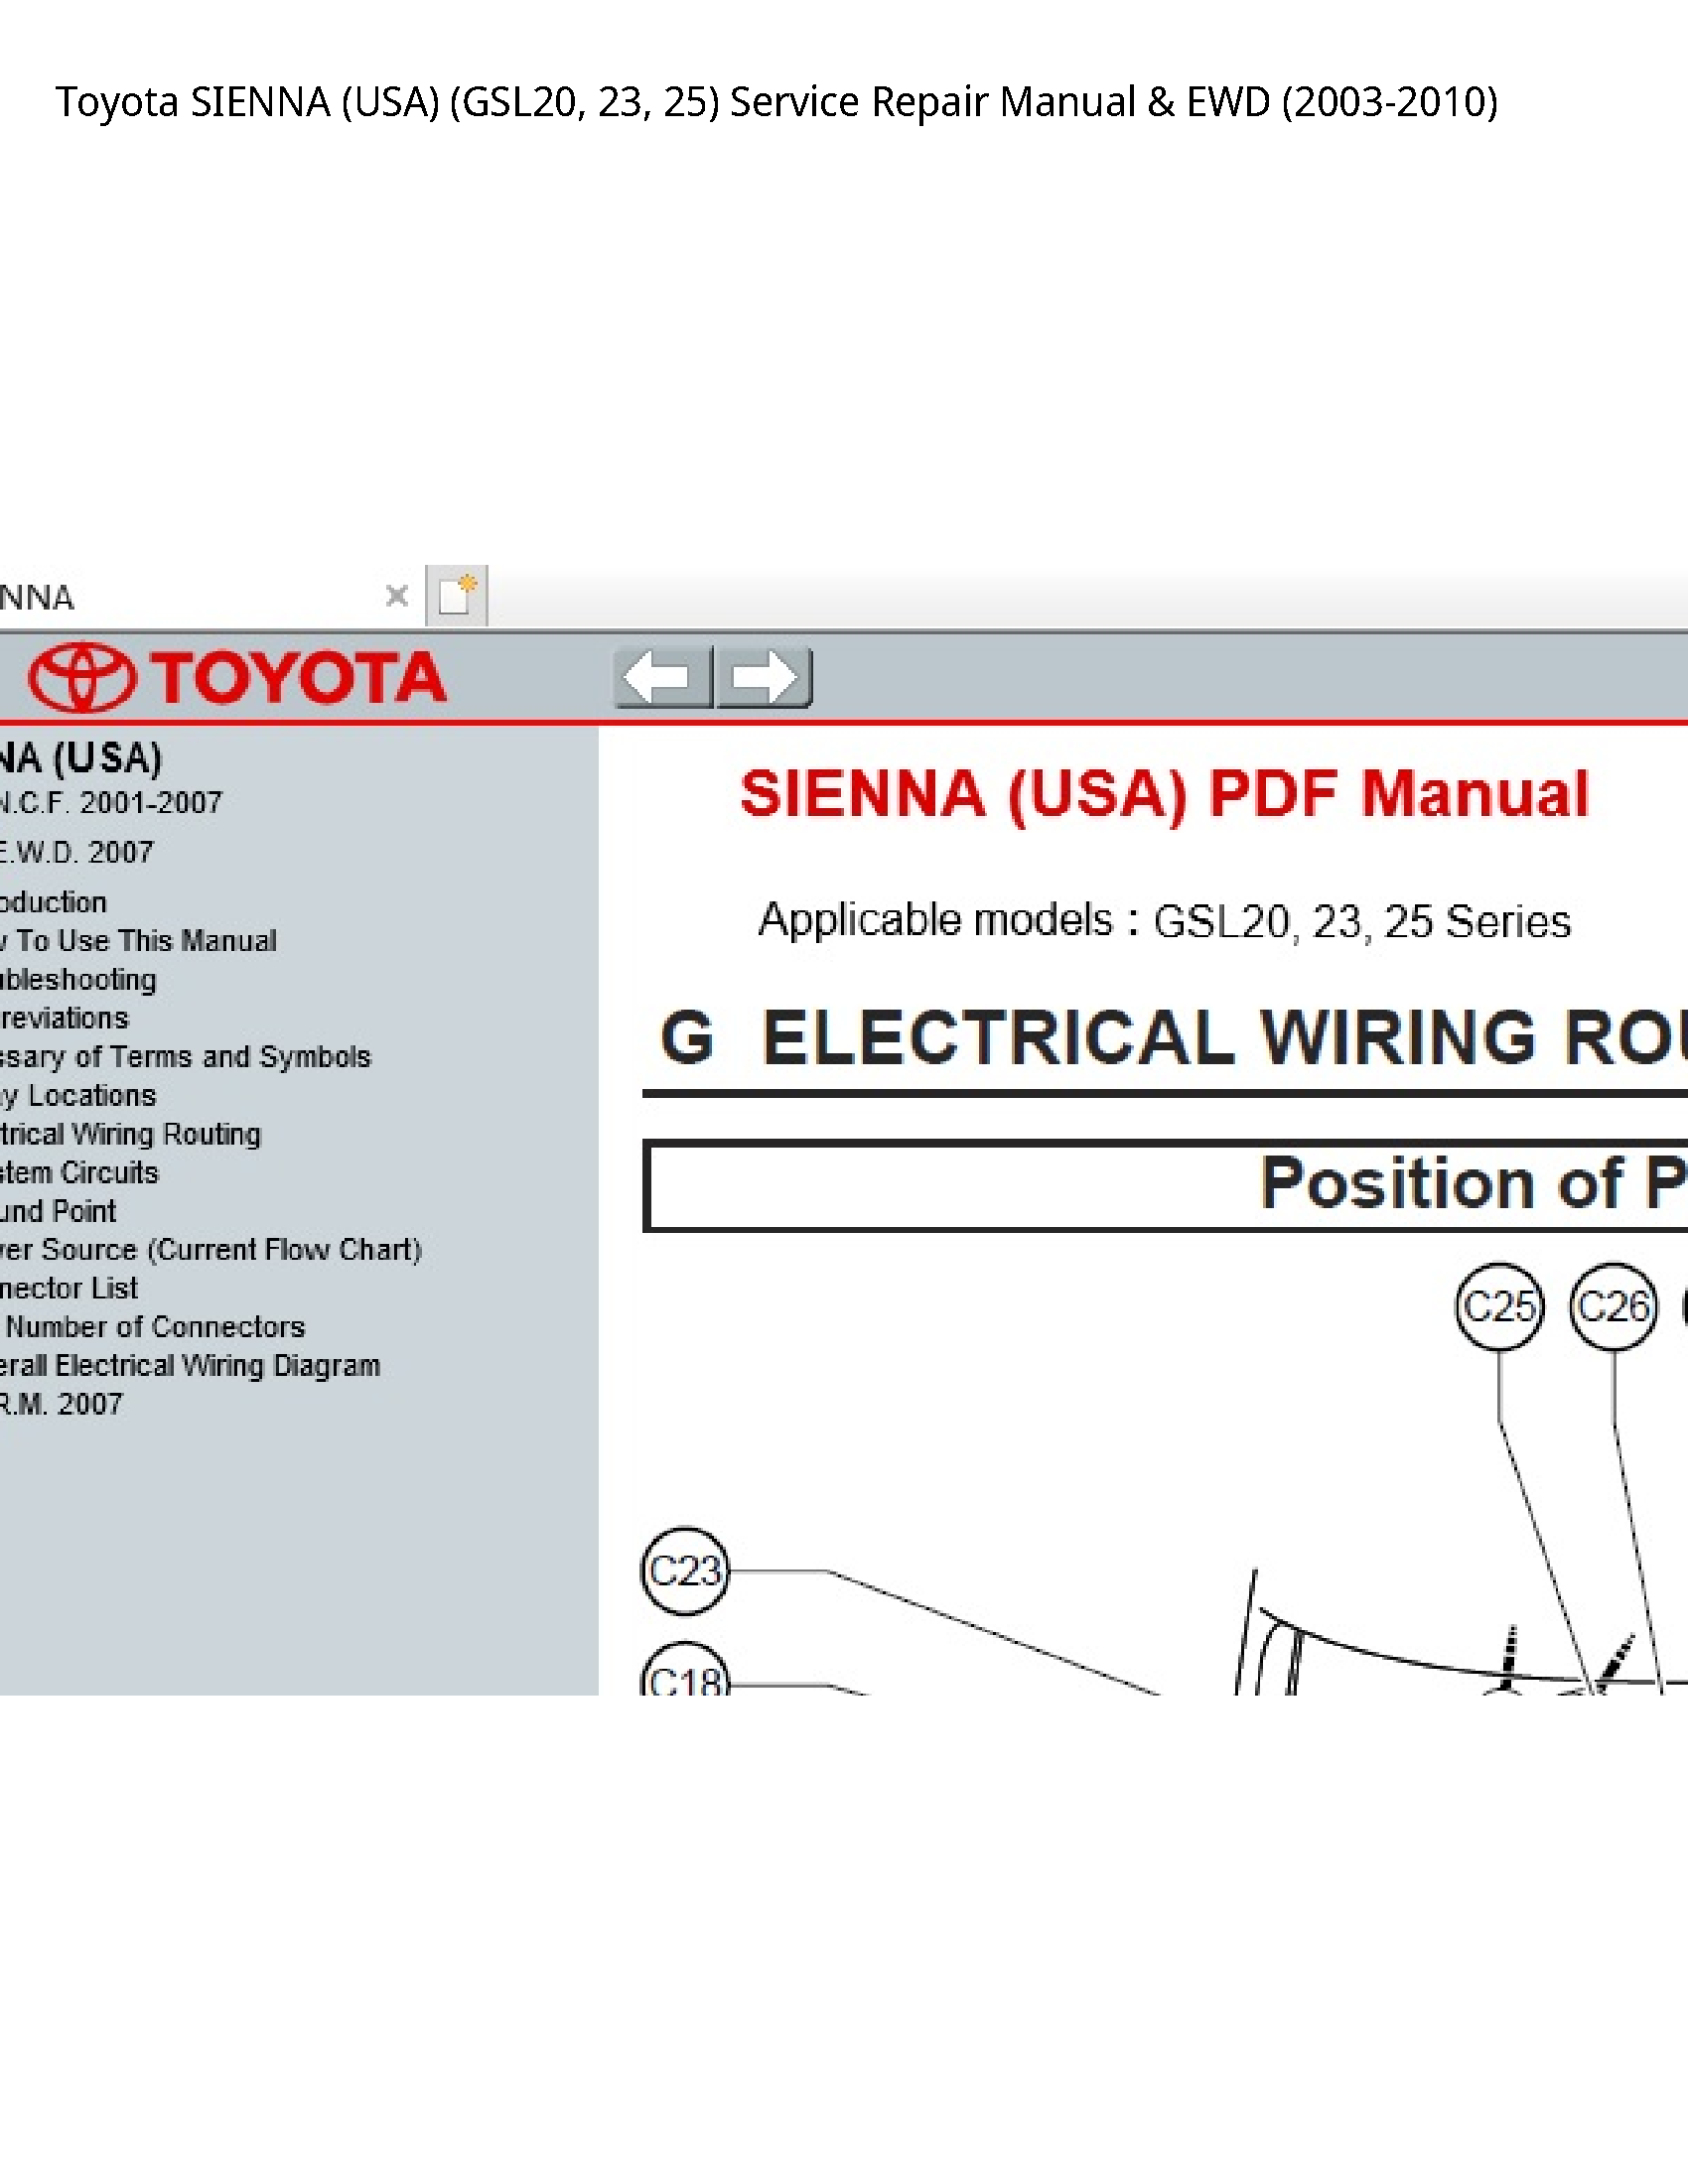 Toyota (GSL20 SIENNA (USA) manual